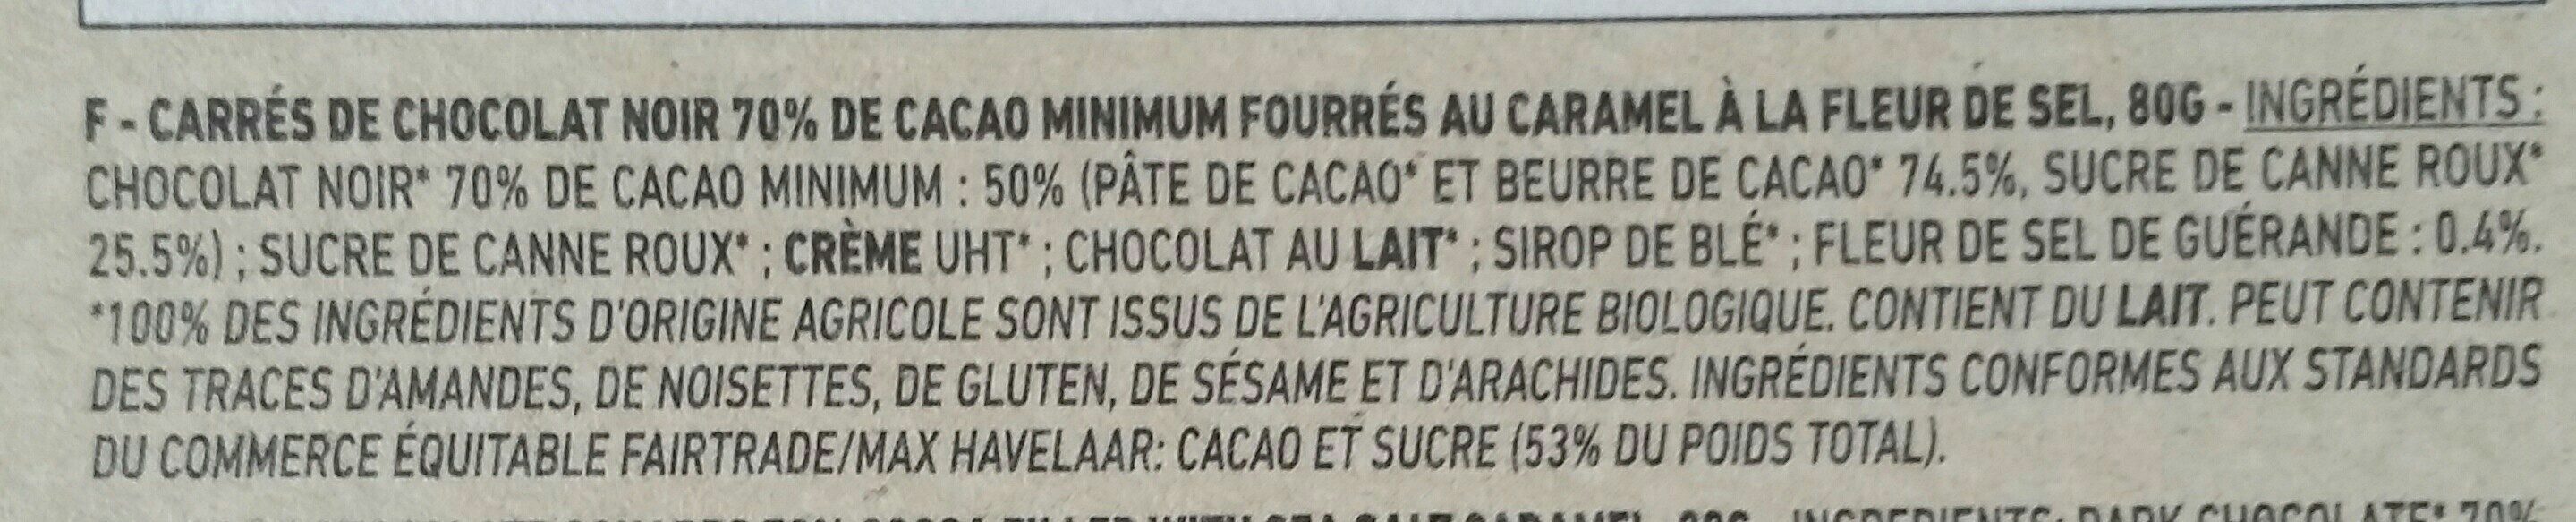 Caramel 18 carrés fourrés chocolat noir - Ingredienser - fr